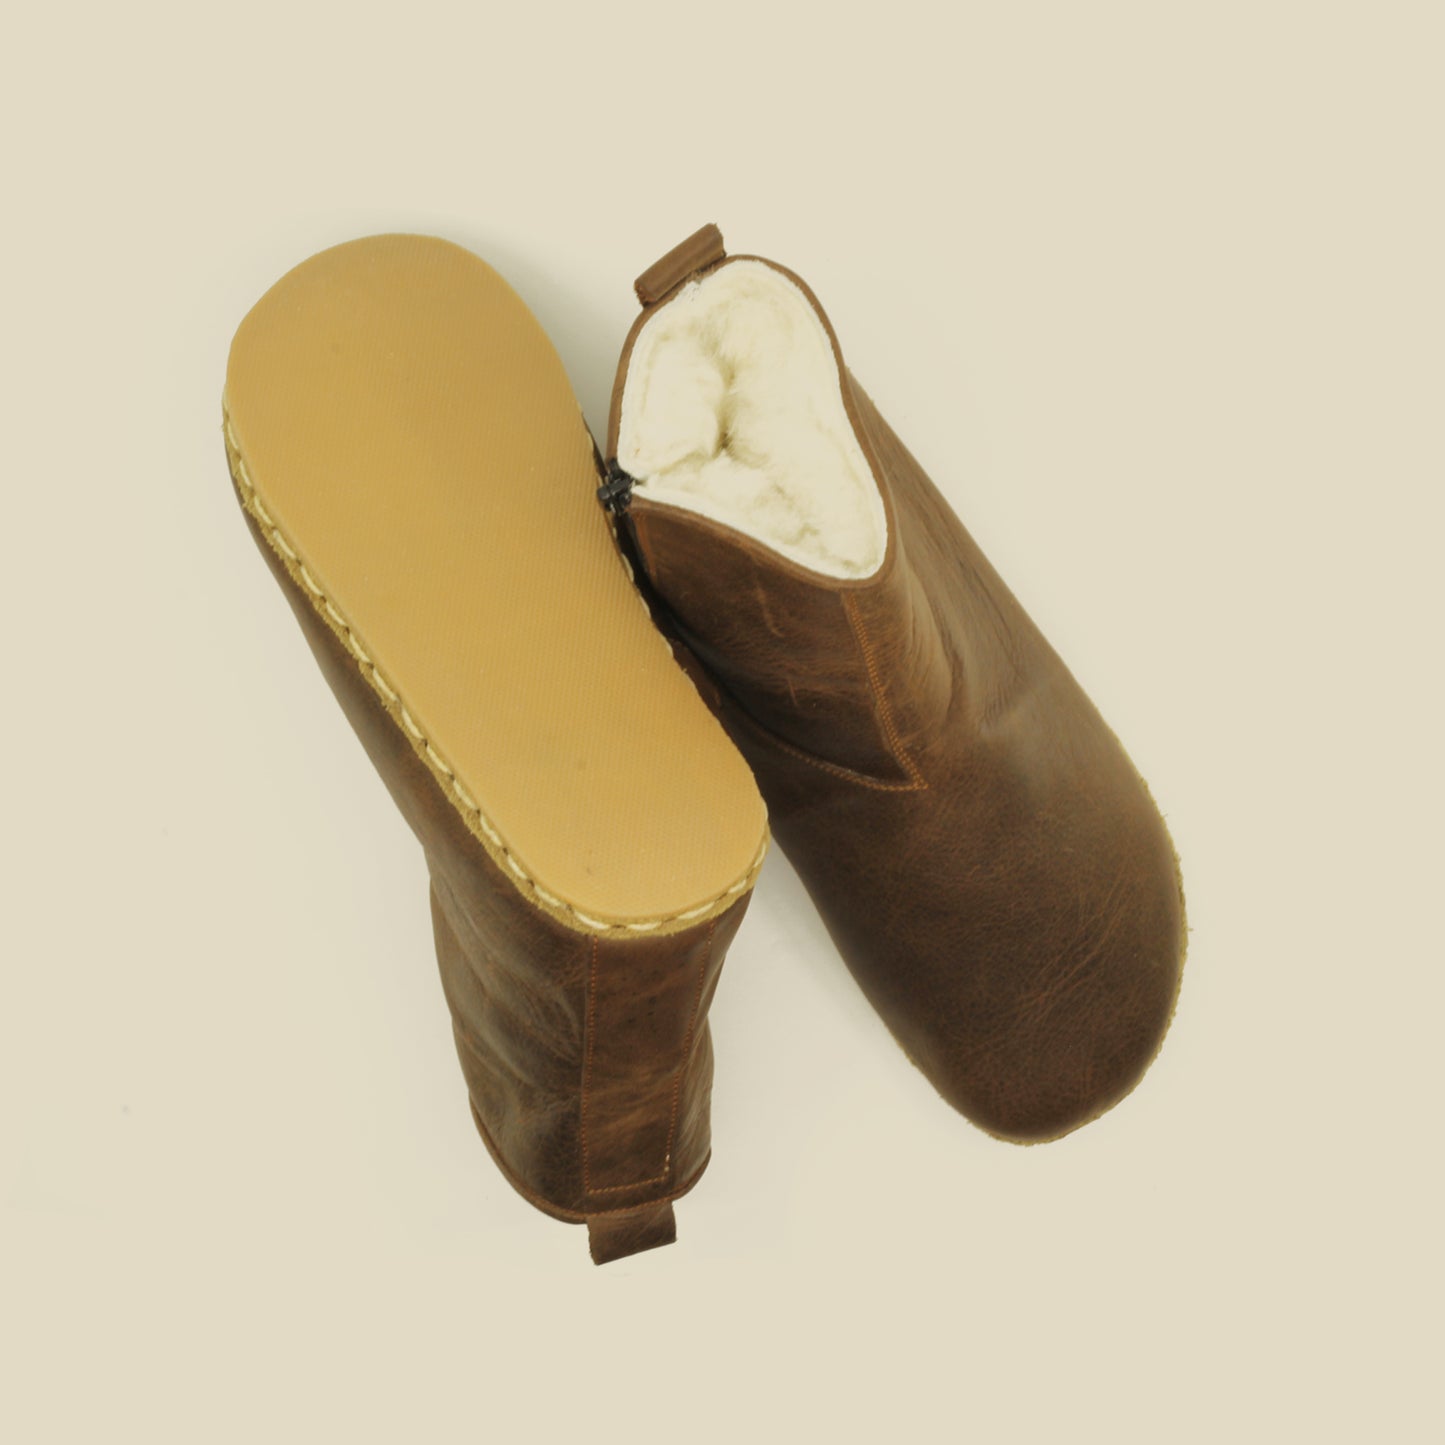 Fur Boot Men, Ankle Barefoot With Zipper - Crazy Brown - Zero Drop - Rubber Sole